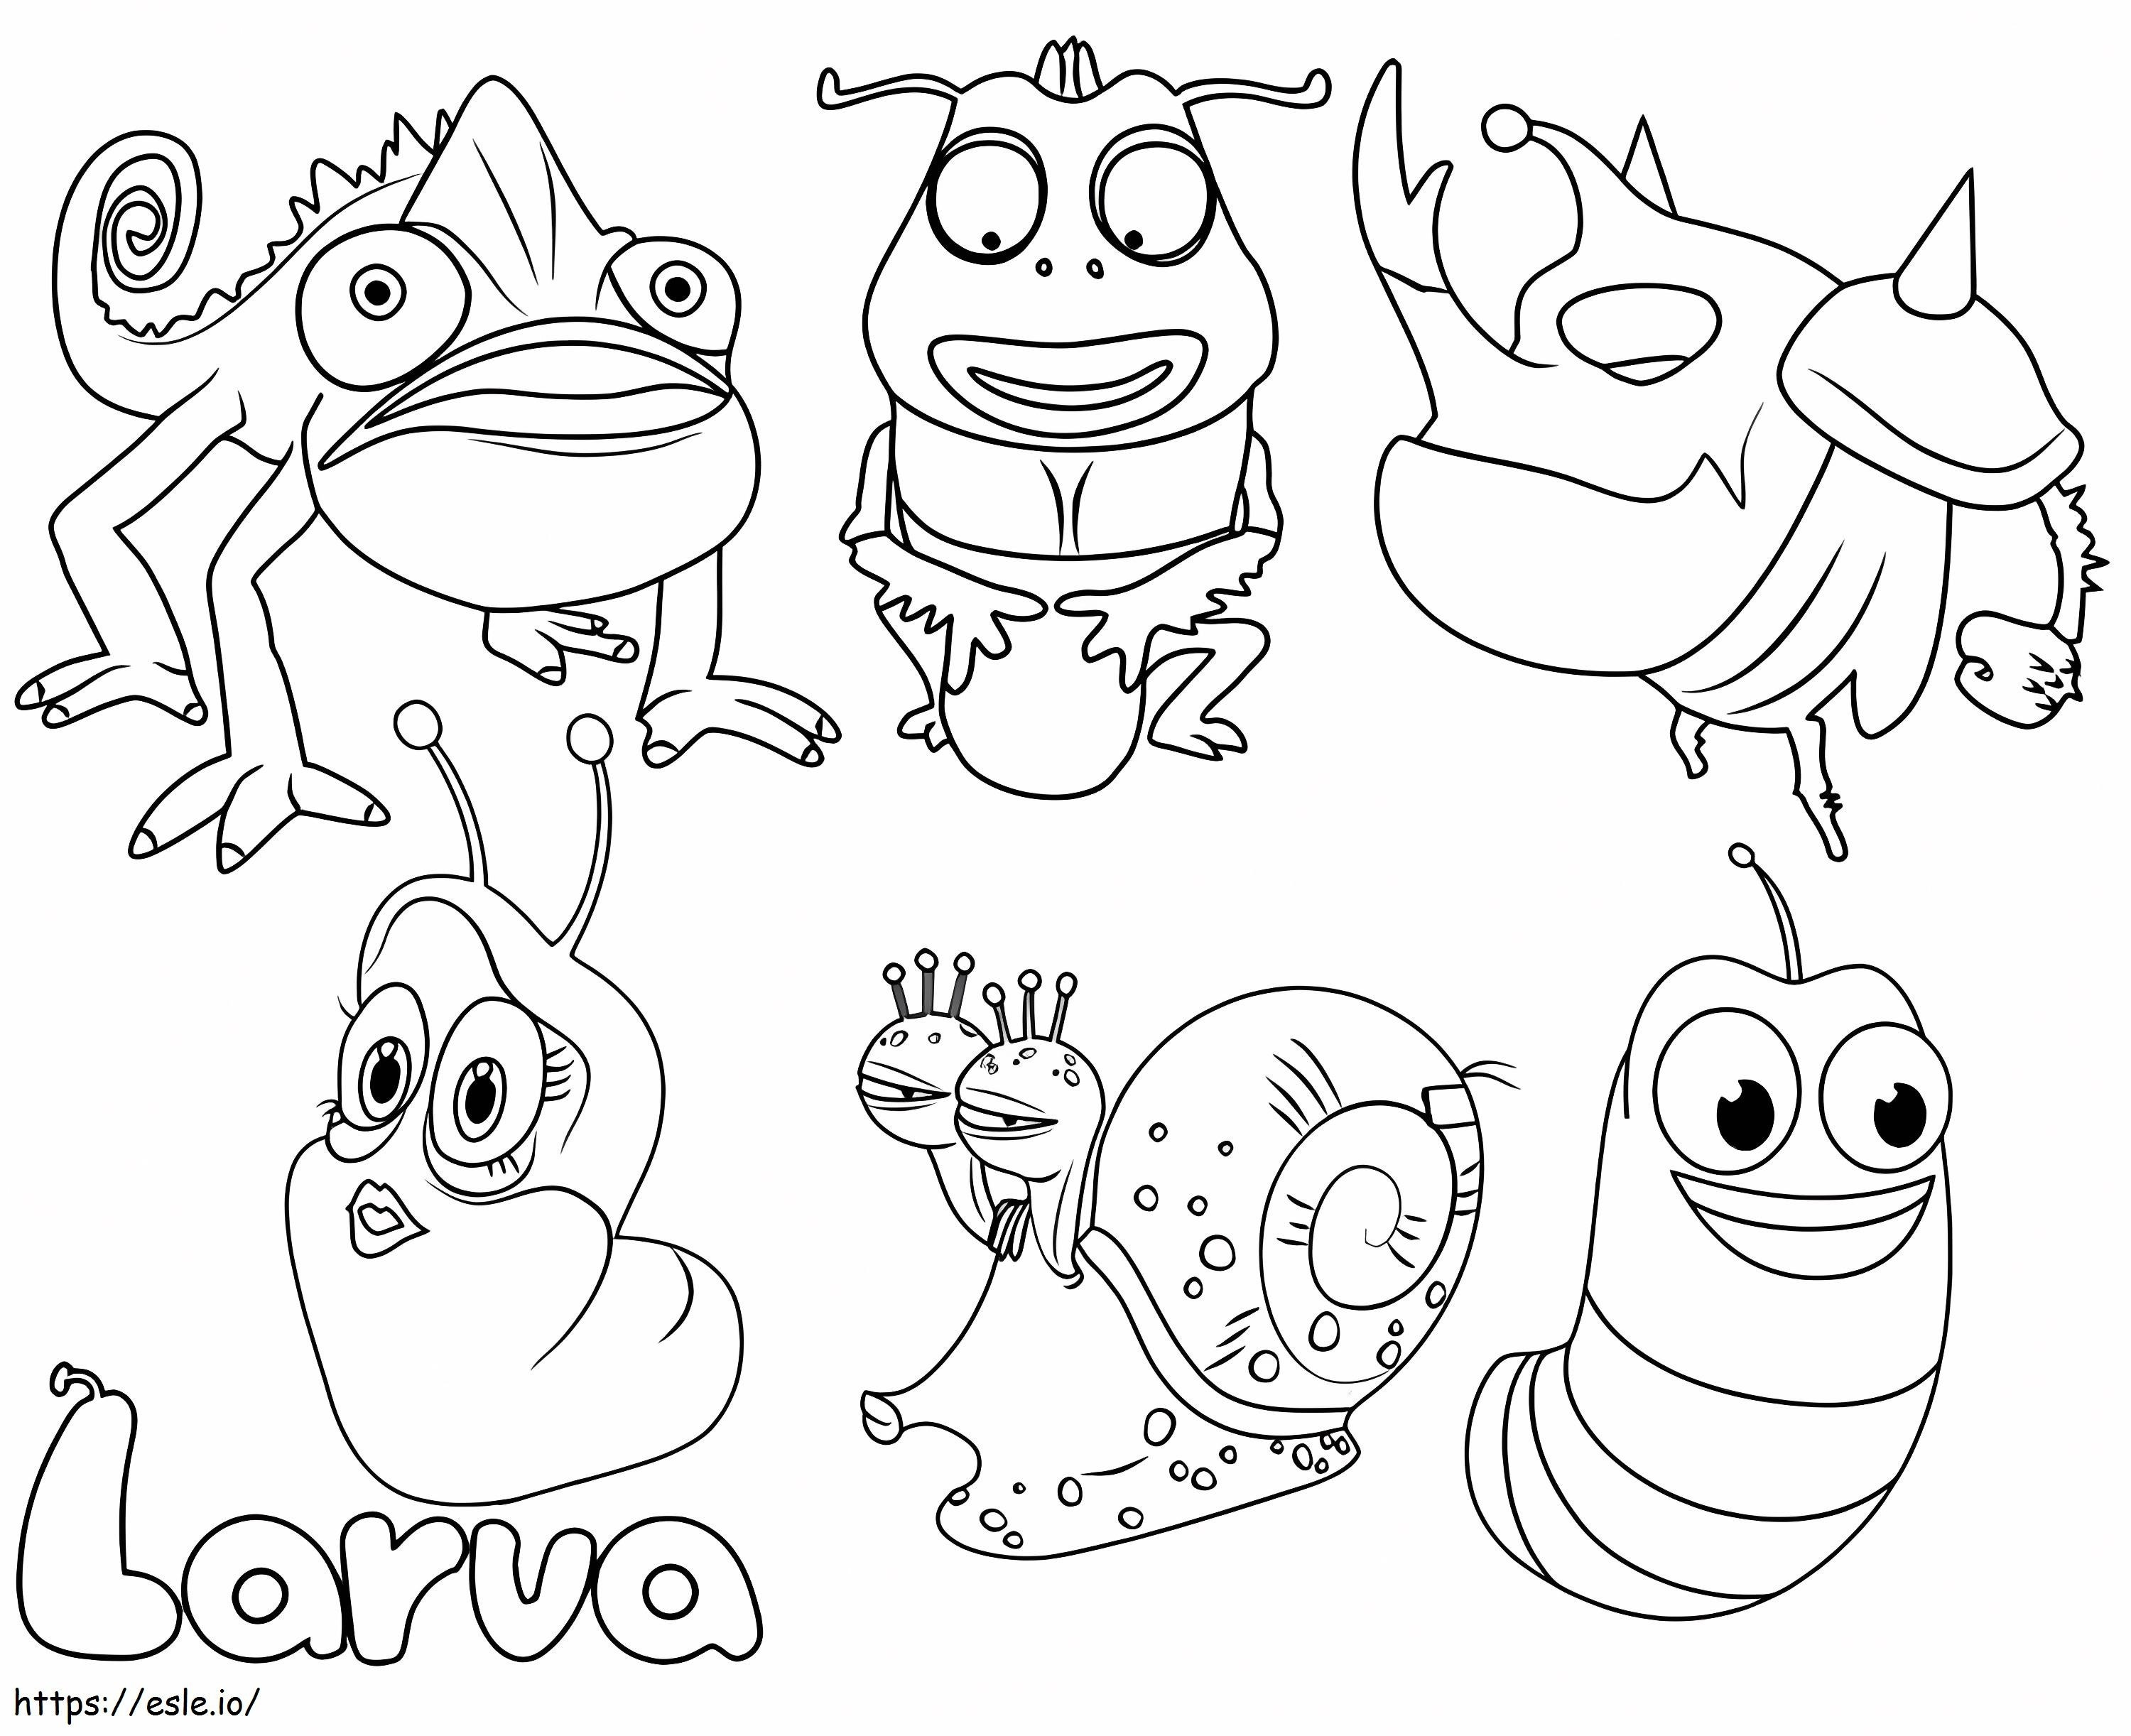 Larva Characters coloring page